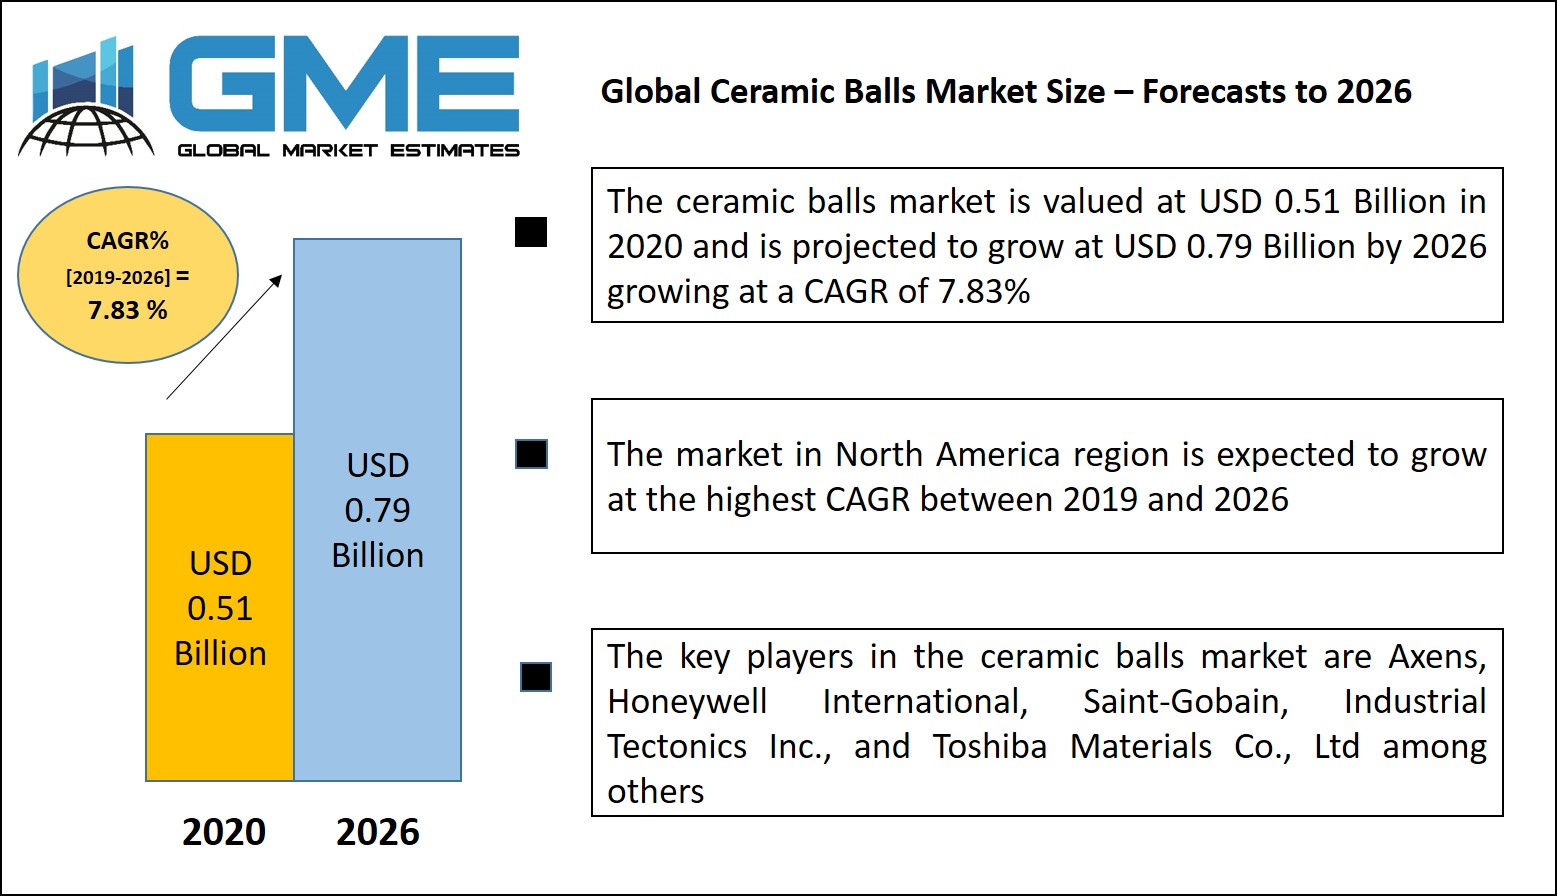 Global Ceramic Balls Market Size – Forecasts to 2026